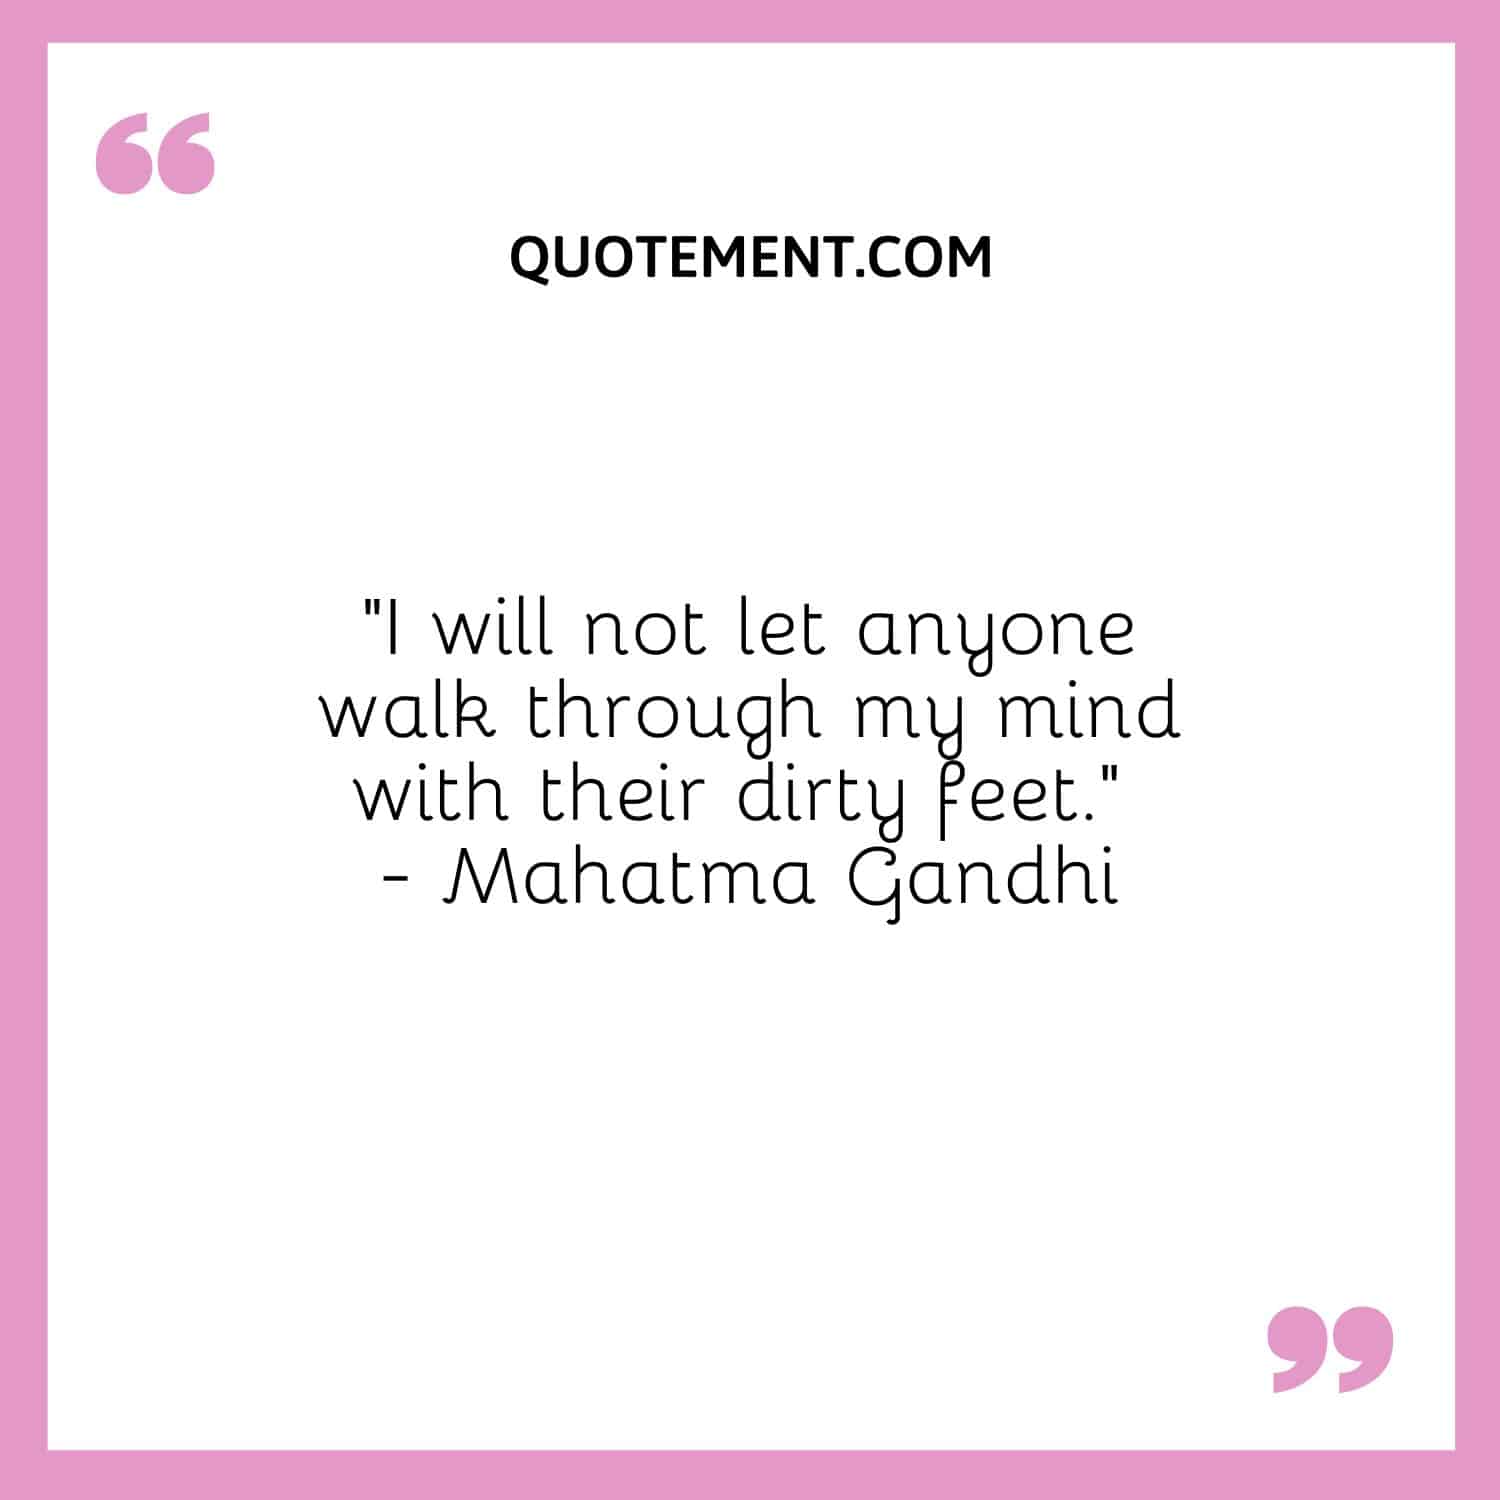 “I will not let anyone walk through my mind with their dirty feet.” - Mahatma Gandhi